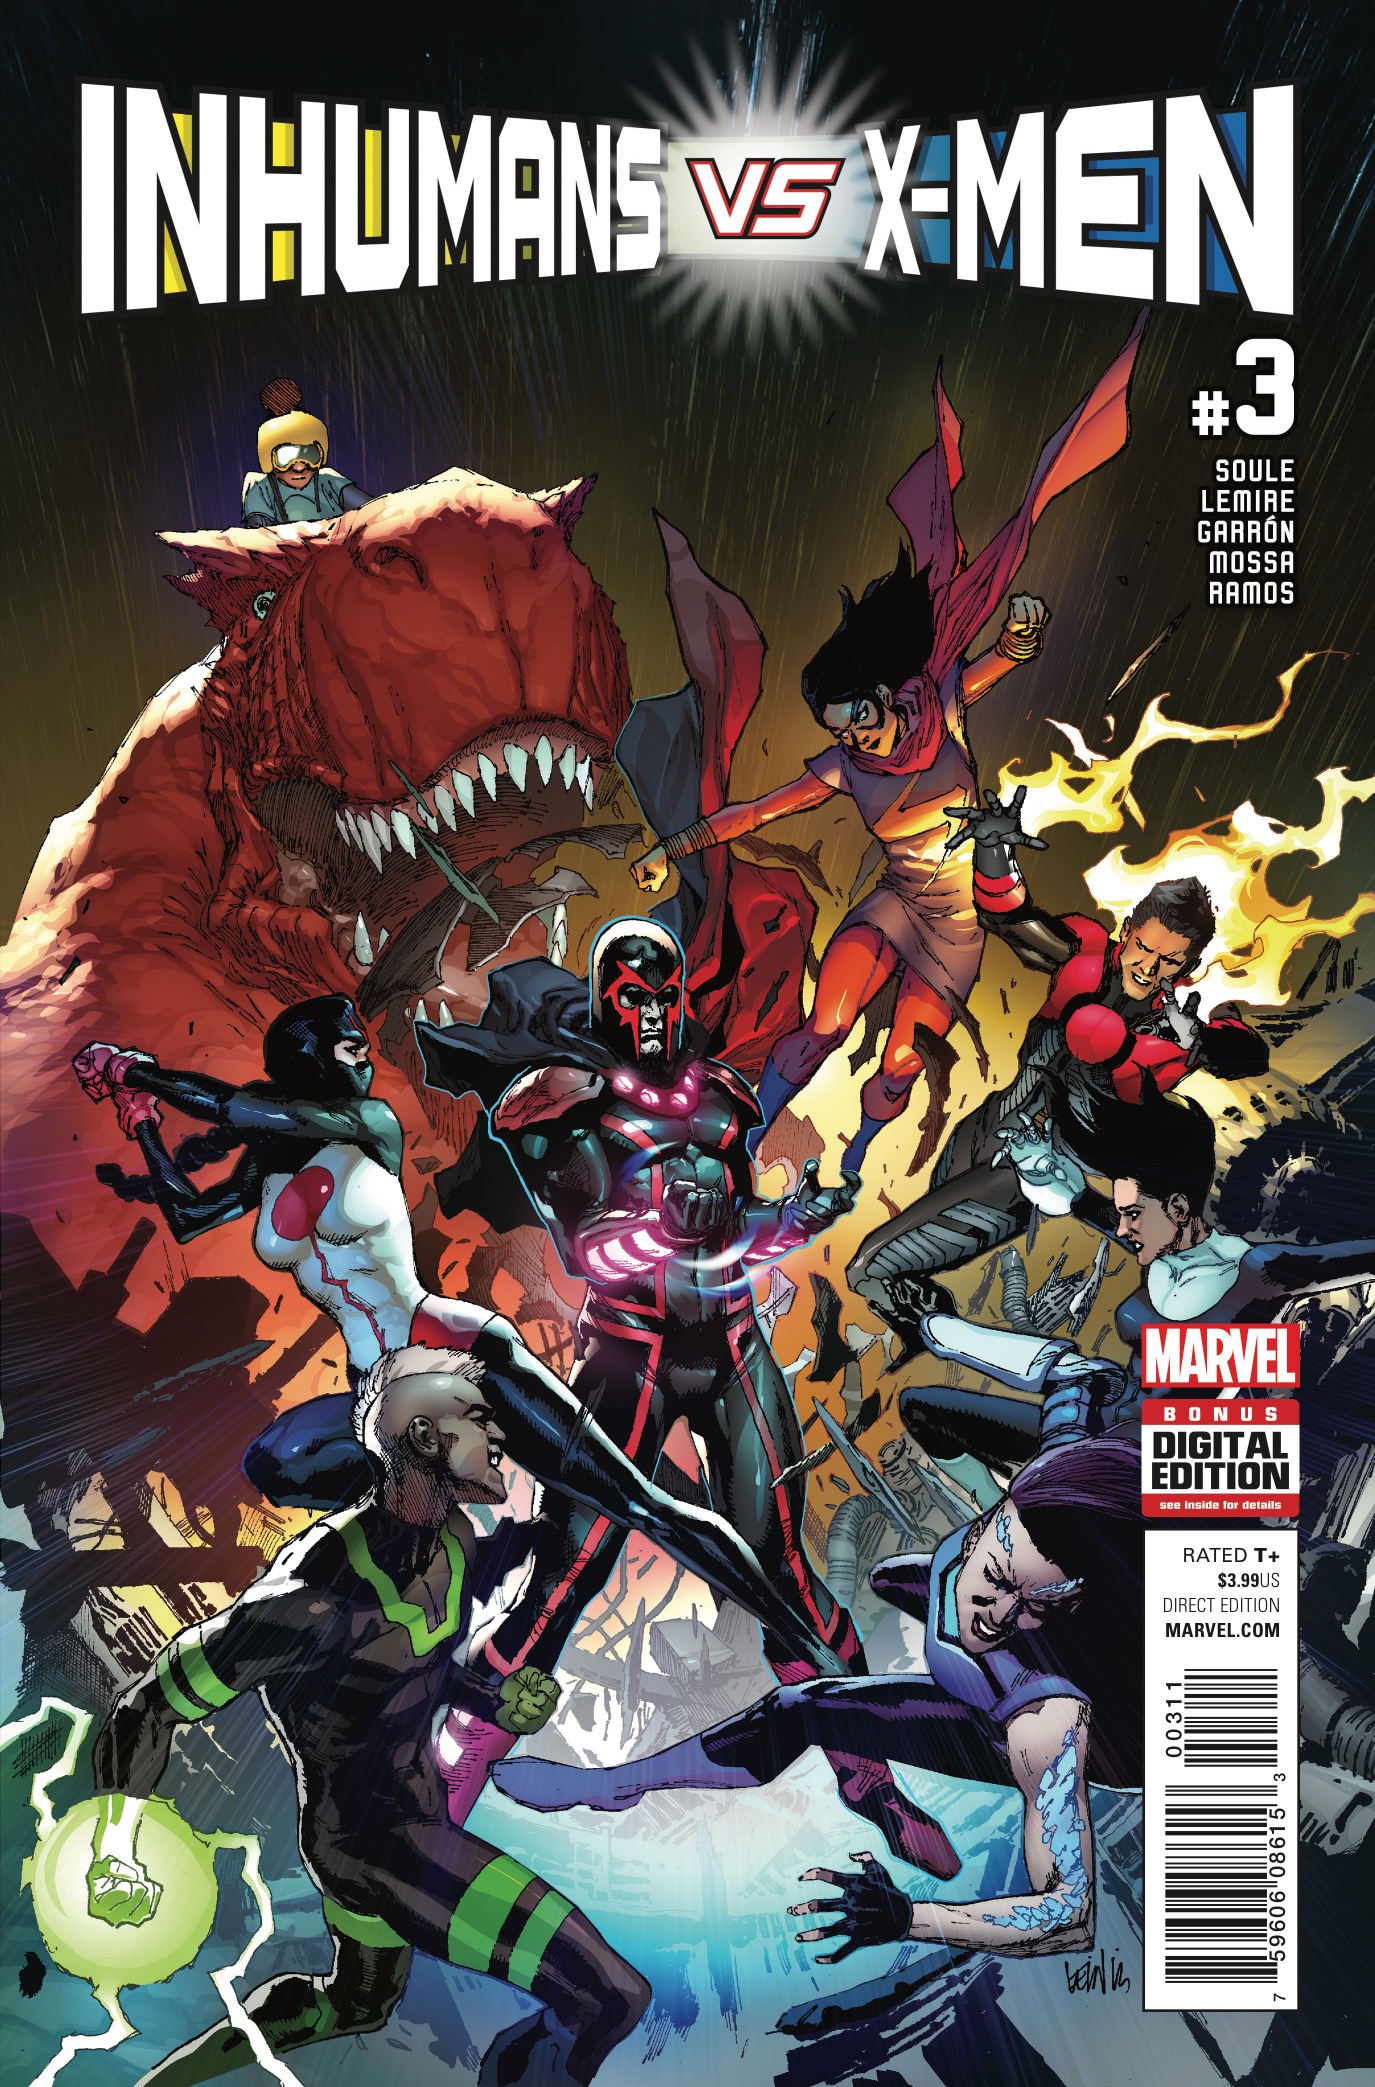 Inhumans Vs. X-Men #3 Review